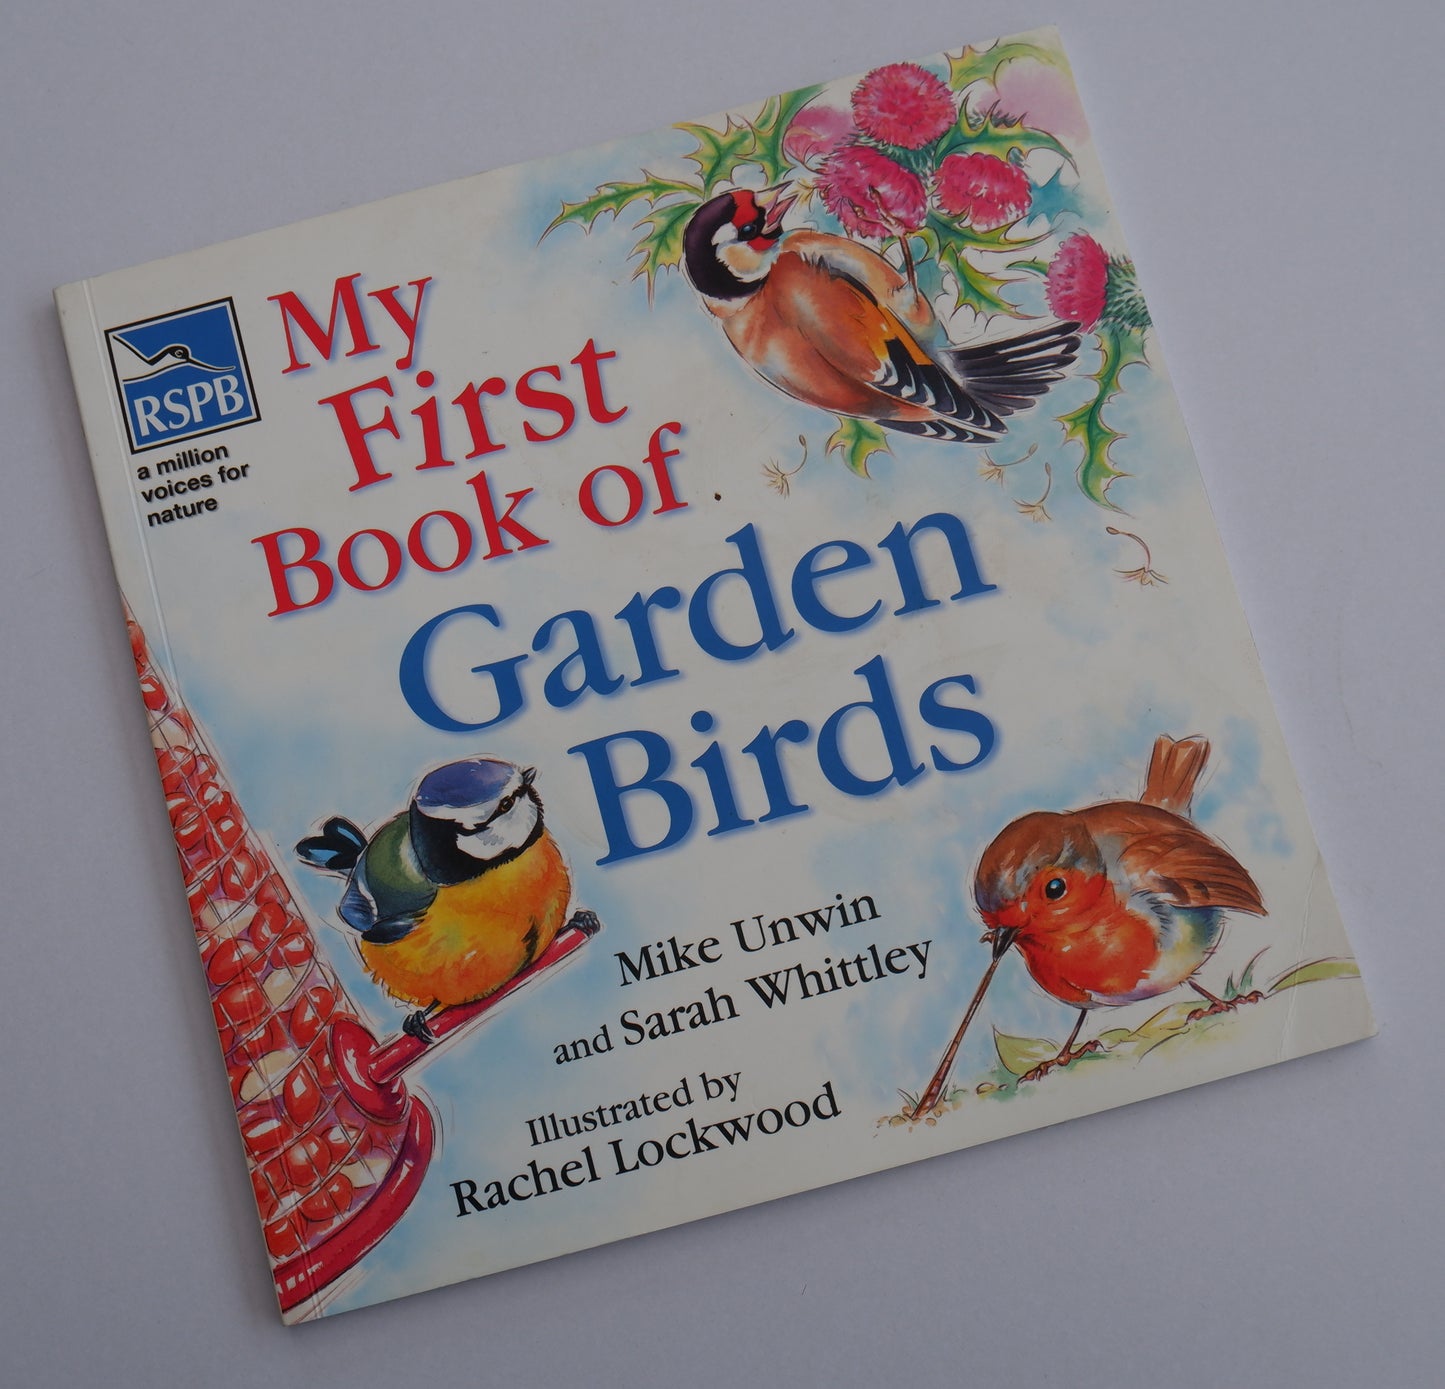 RSPB - My First Book of Garden Birds - Rachel Lockwood